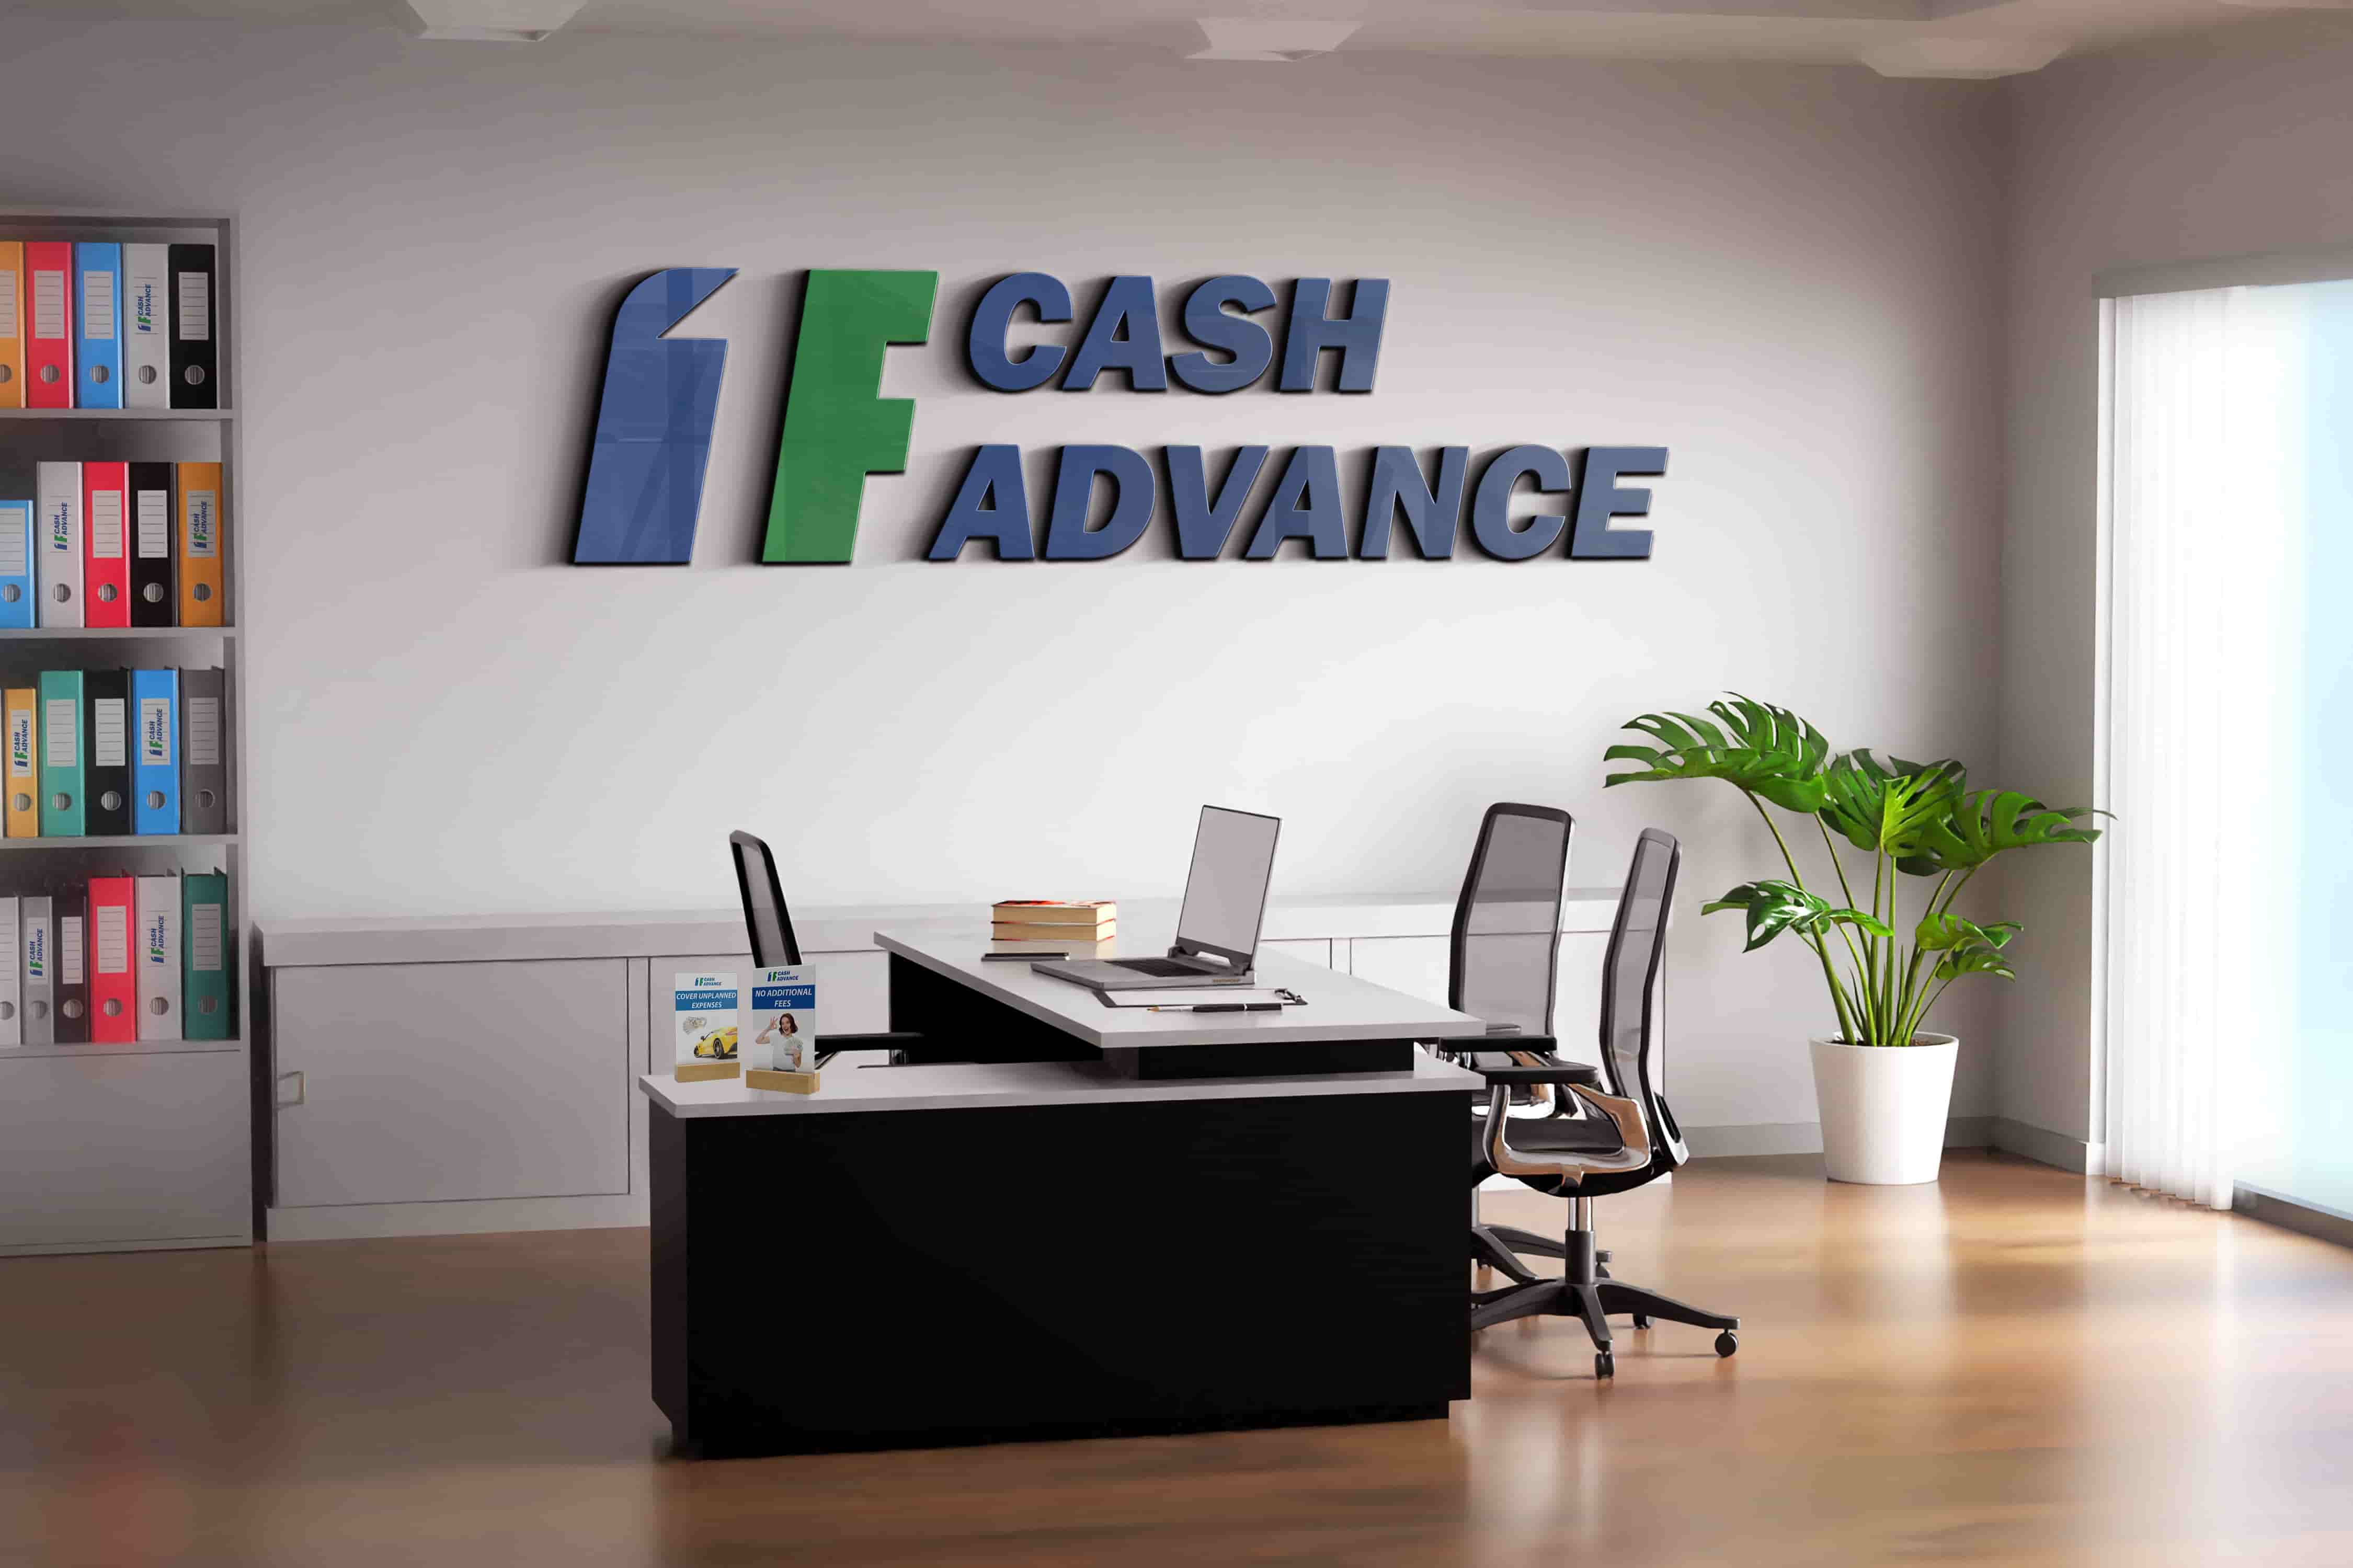 Cash advance in San Diego, CA 92115